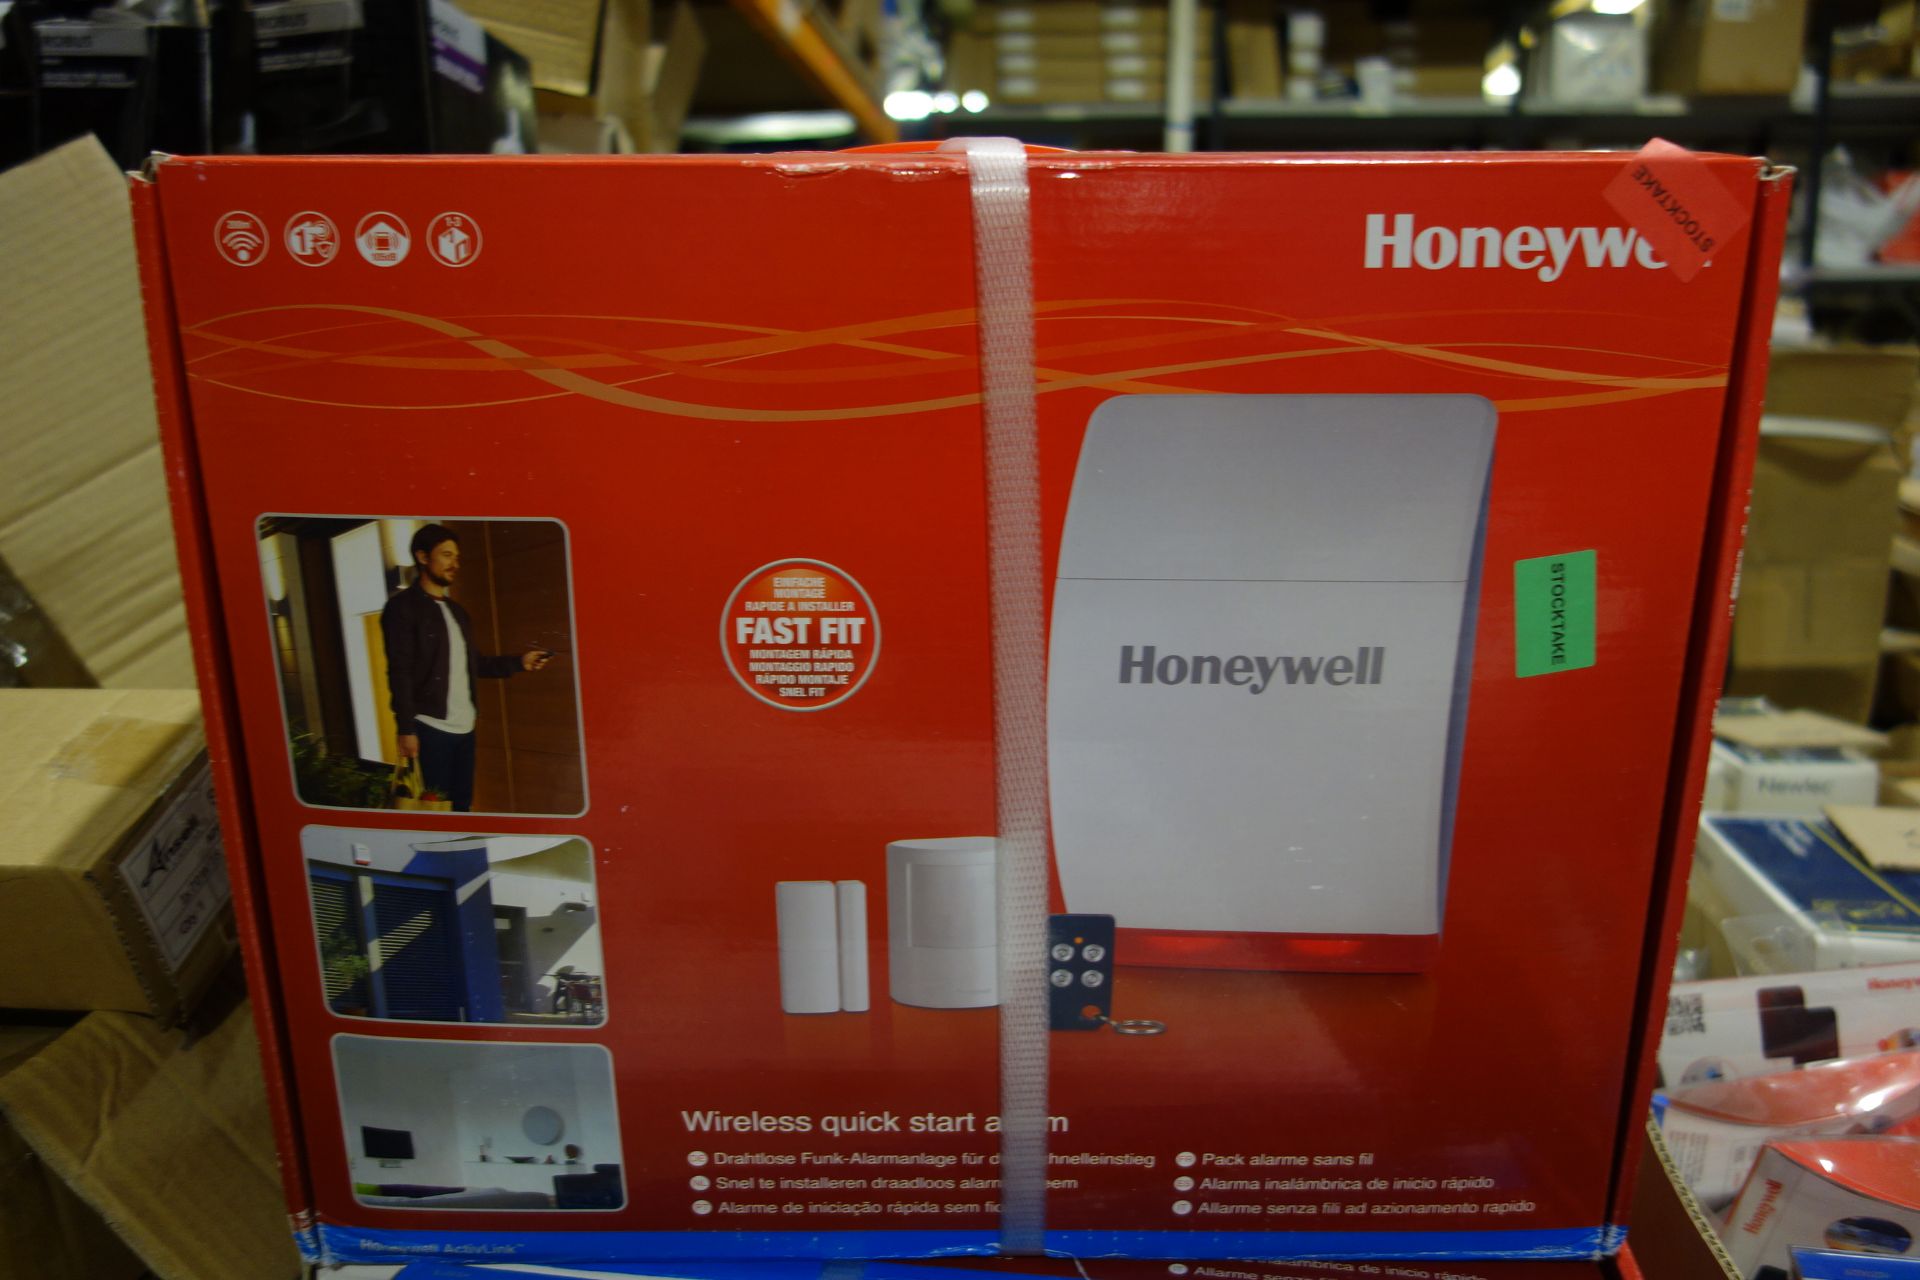 1x Honeywell HS311S Wireless Quick Start Alarm